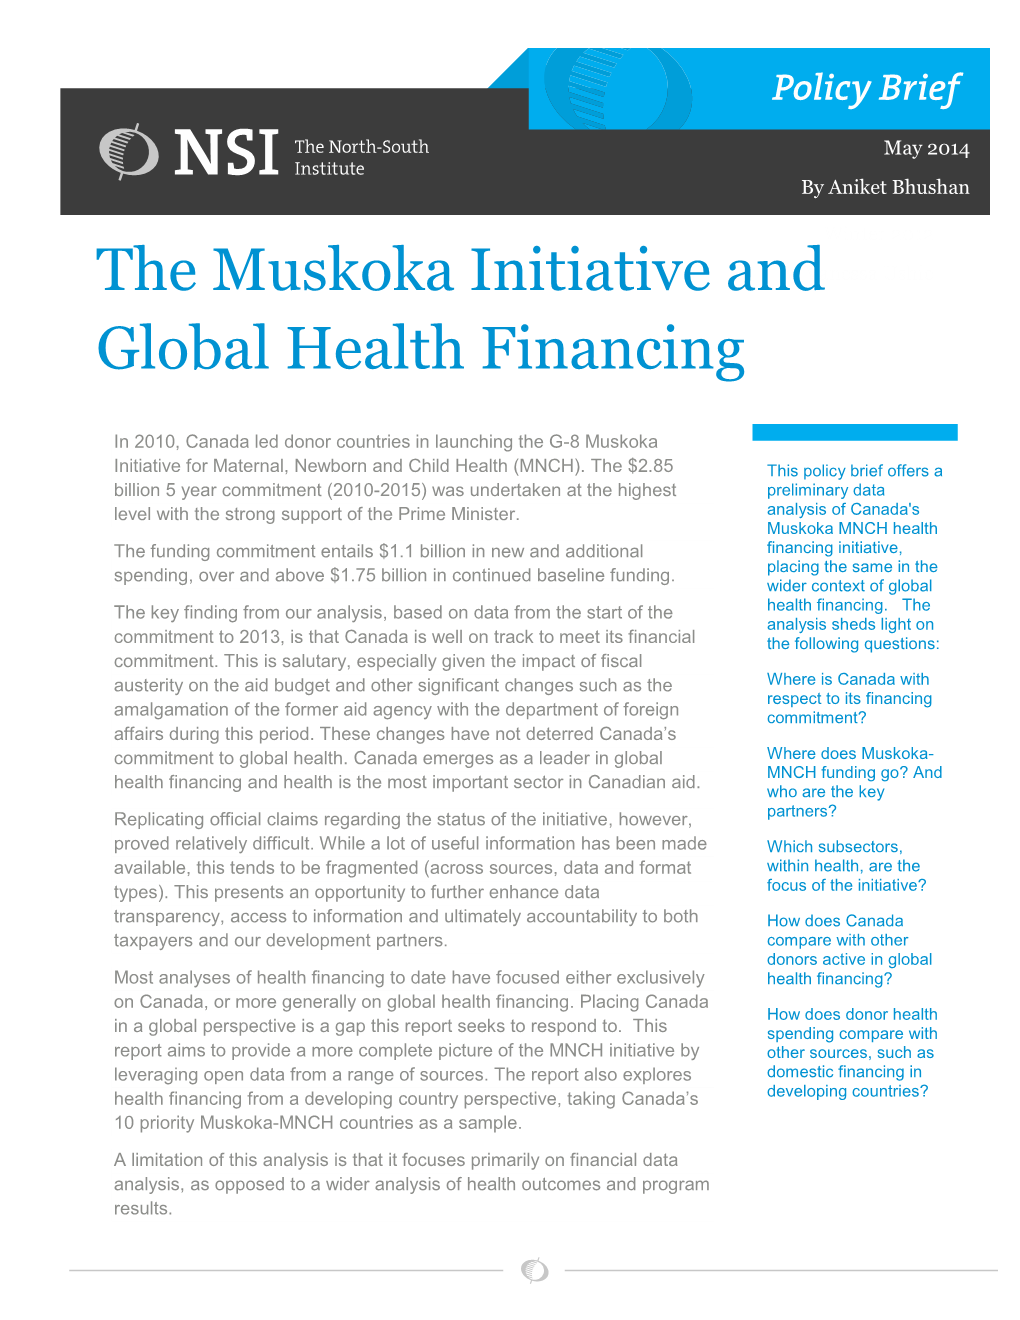 The Muskoka Initiative and Global Health Financing